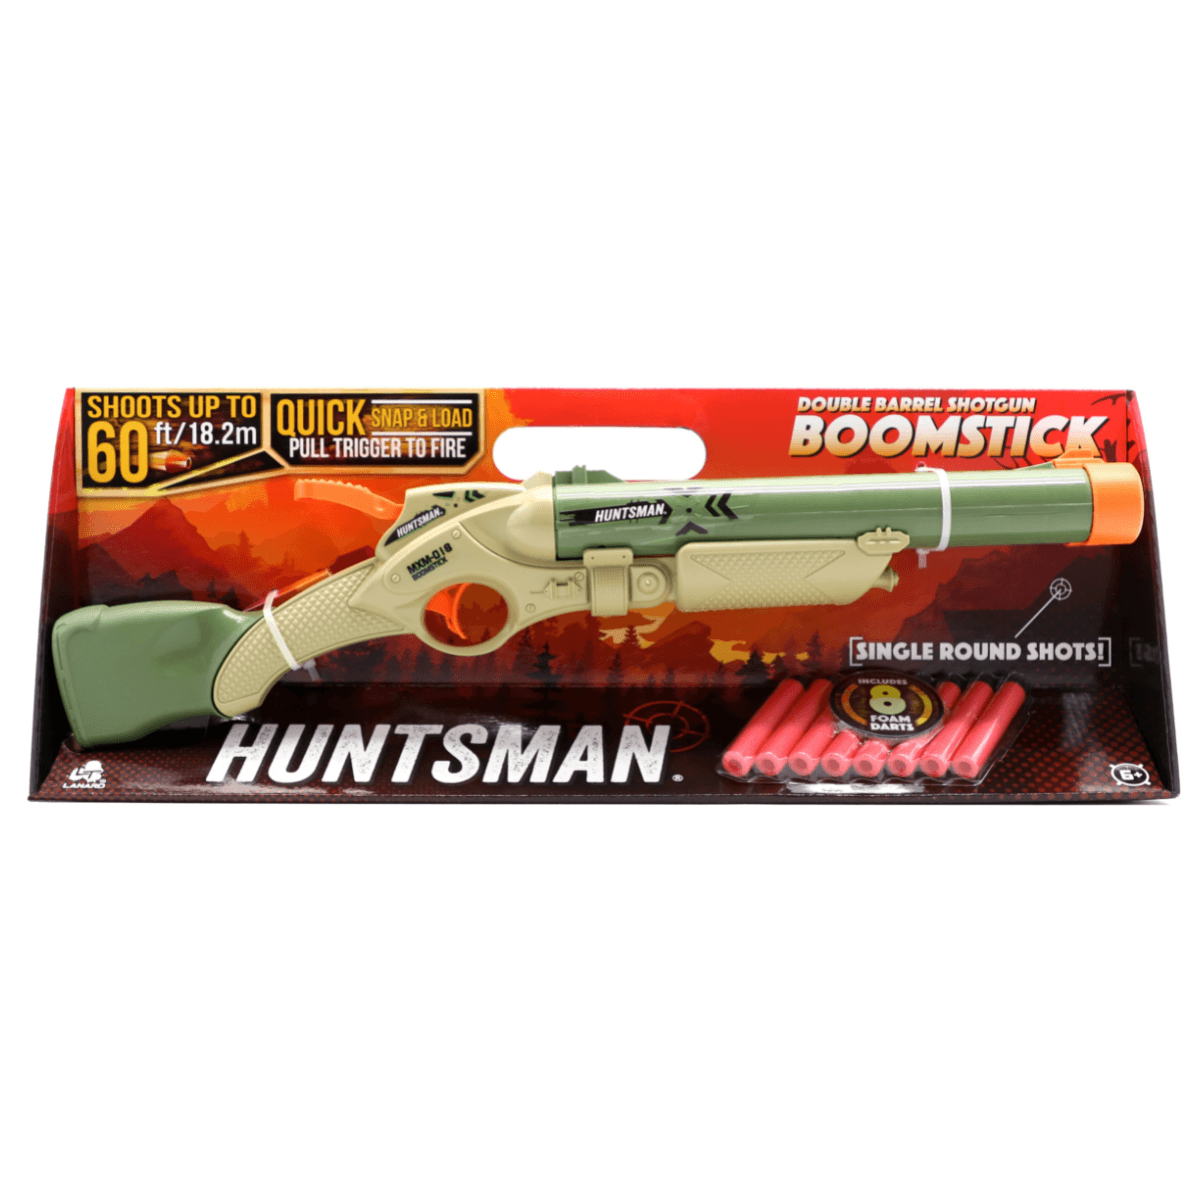 Huntsman Boomstick